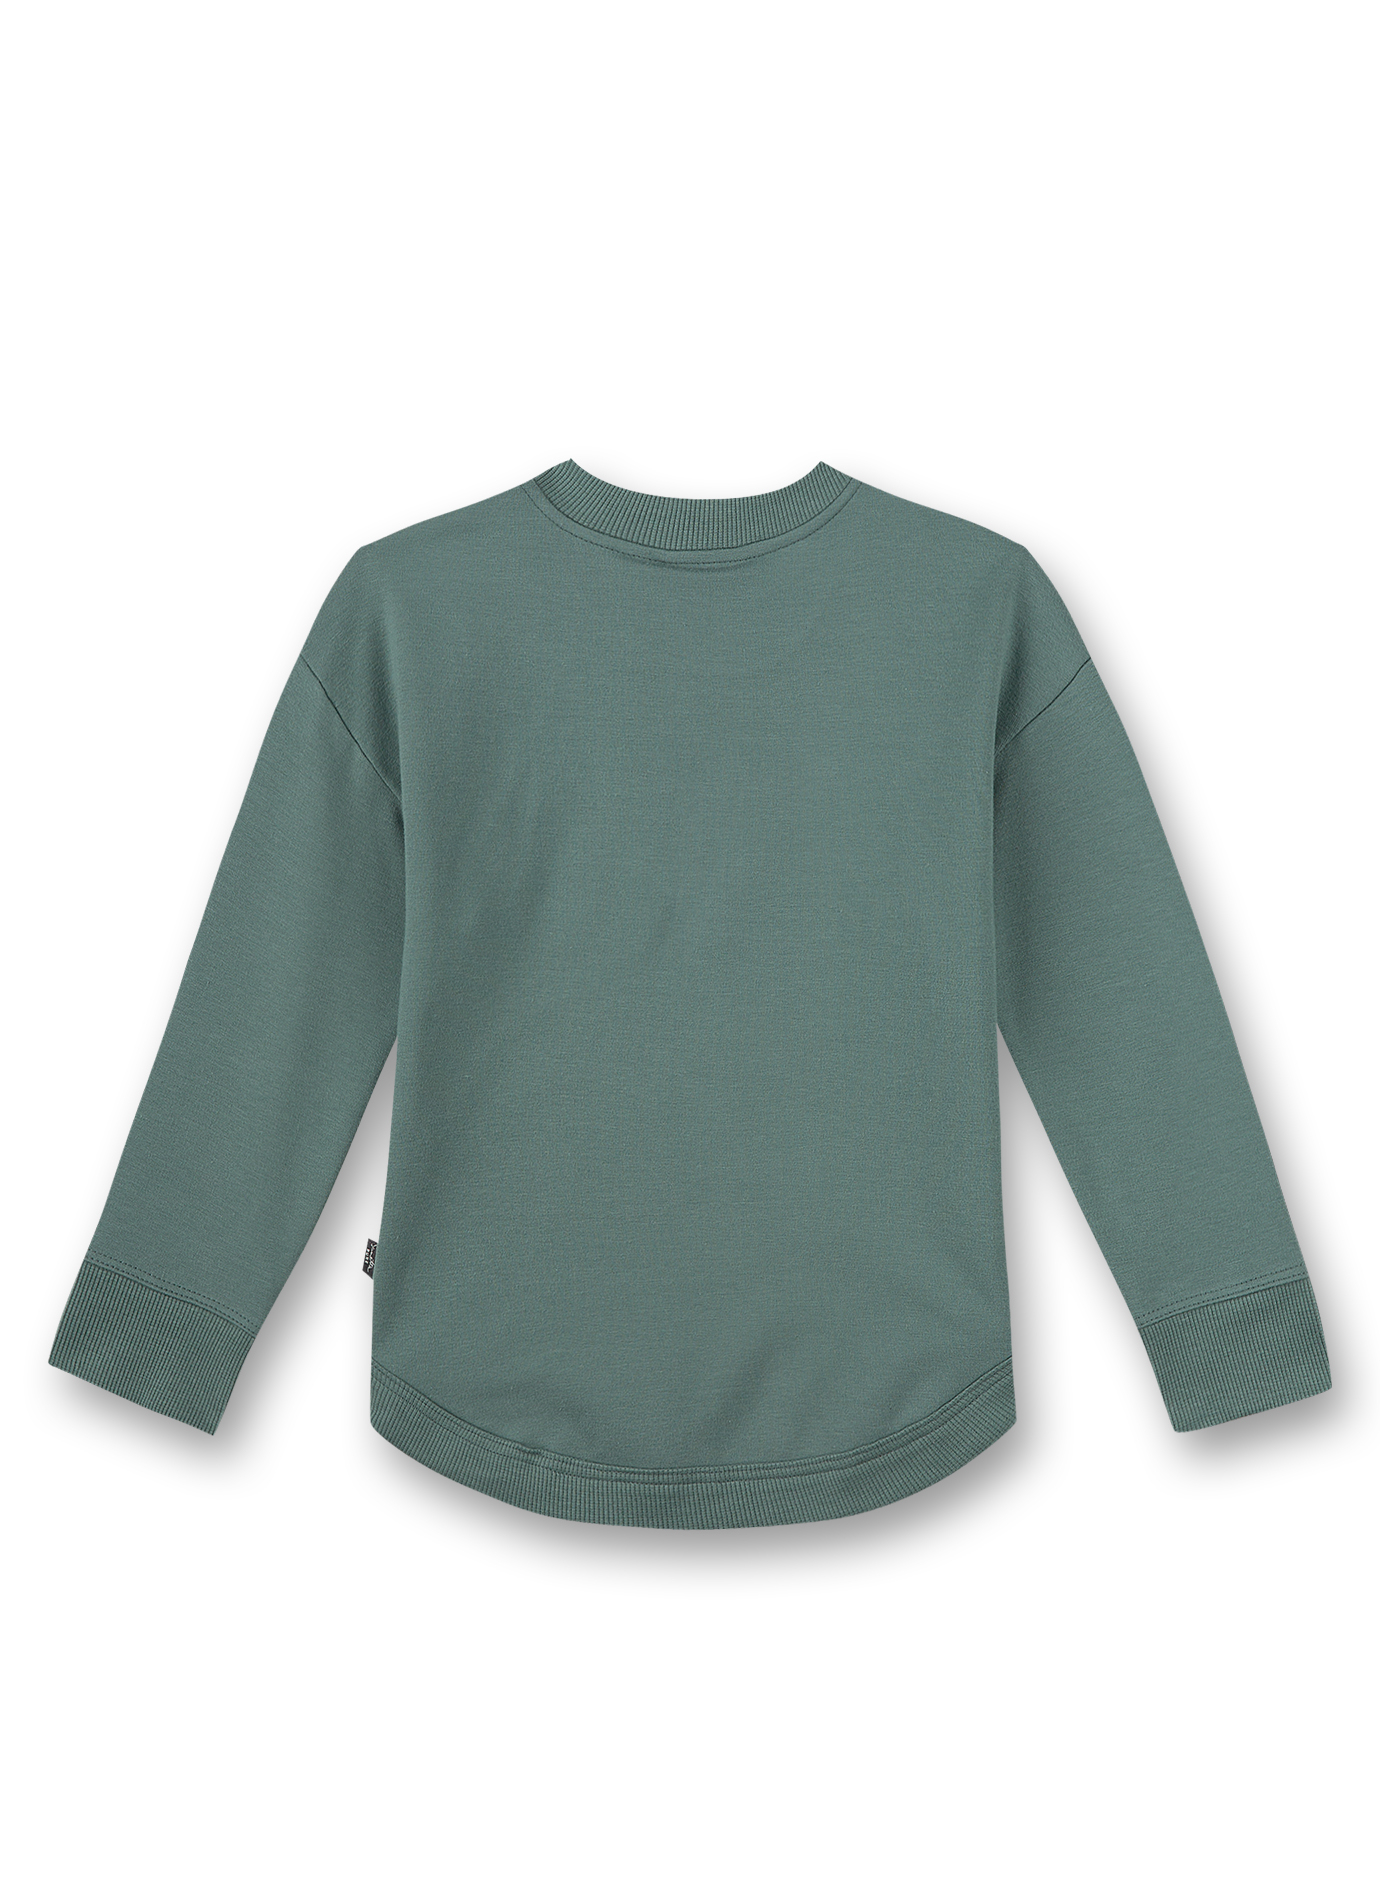 Unisex-Sweatshirt Grün 